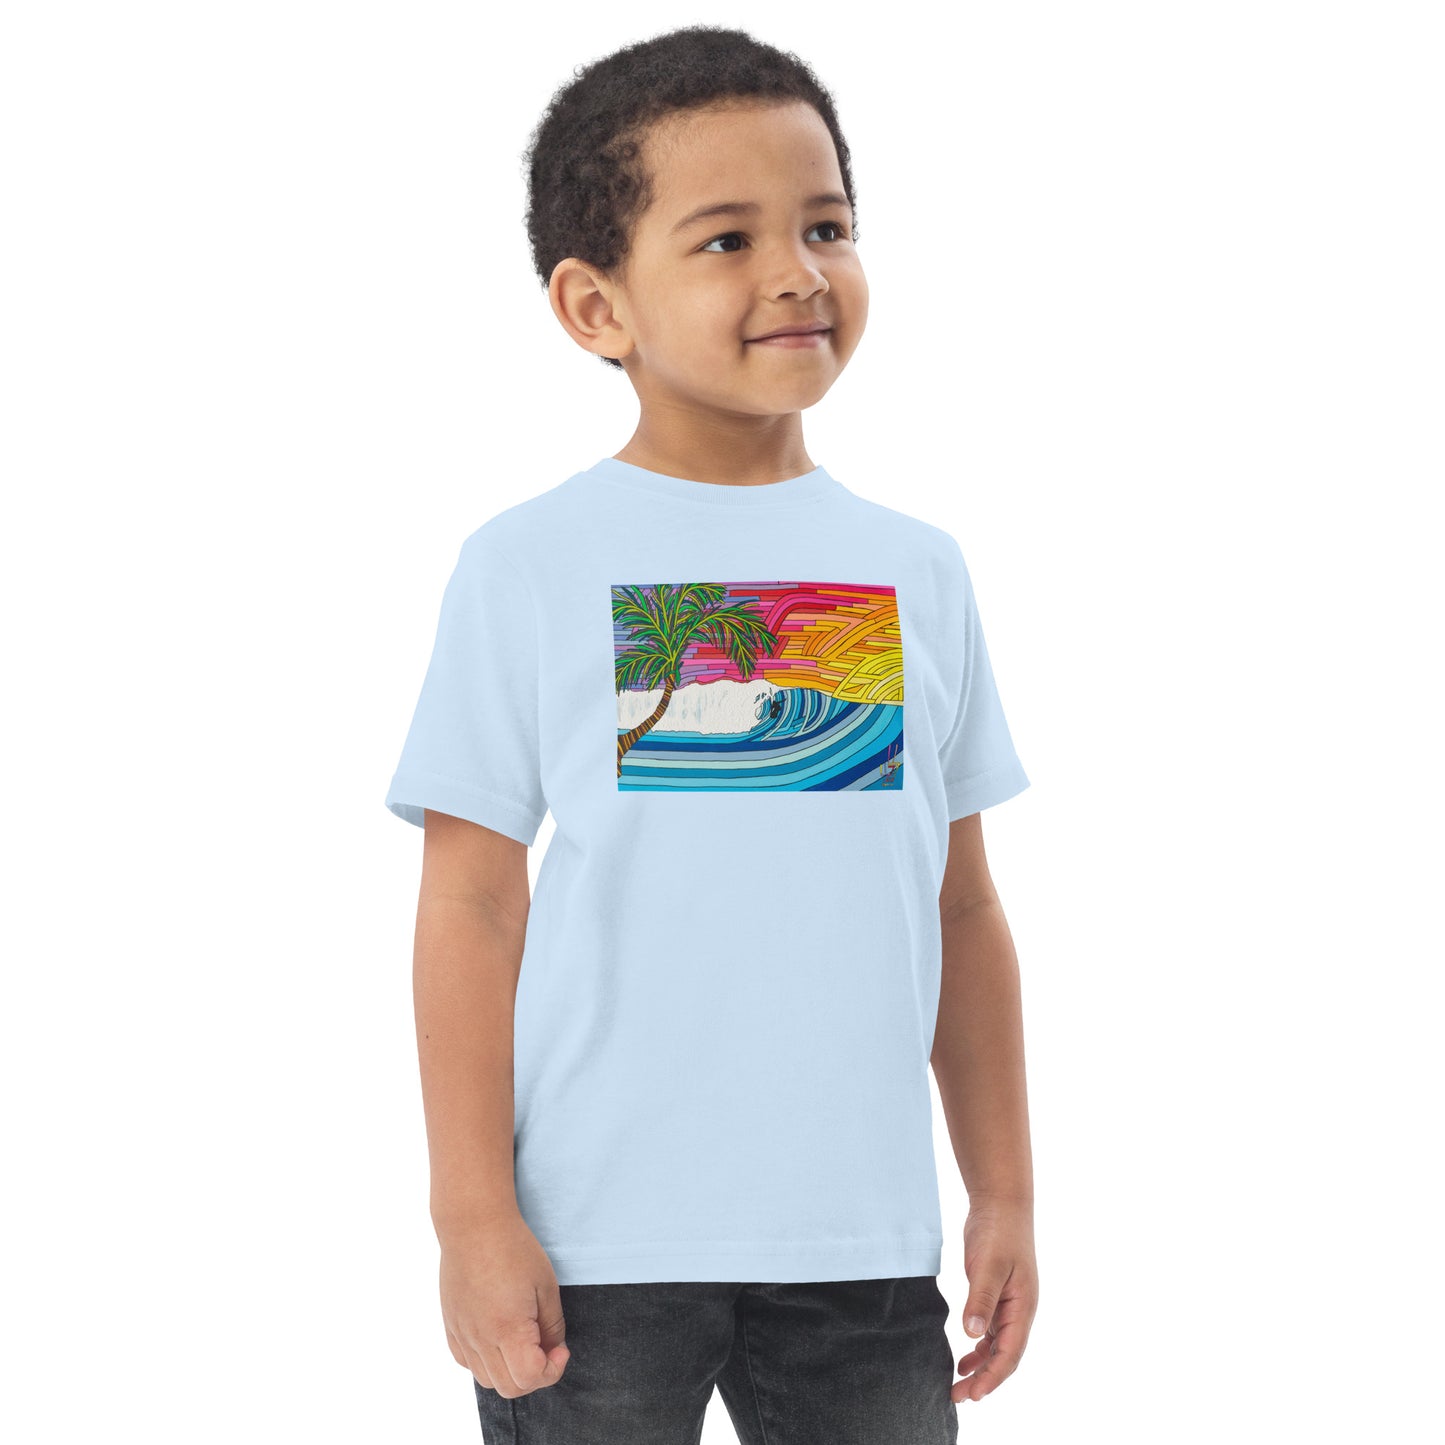 Palm Tree Sunset Surf - Toddler jersey t-shirt